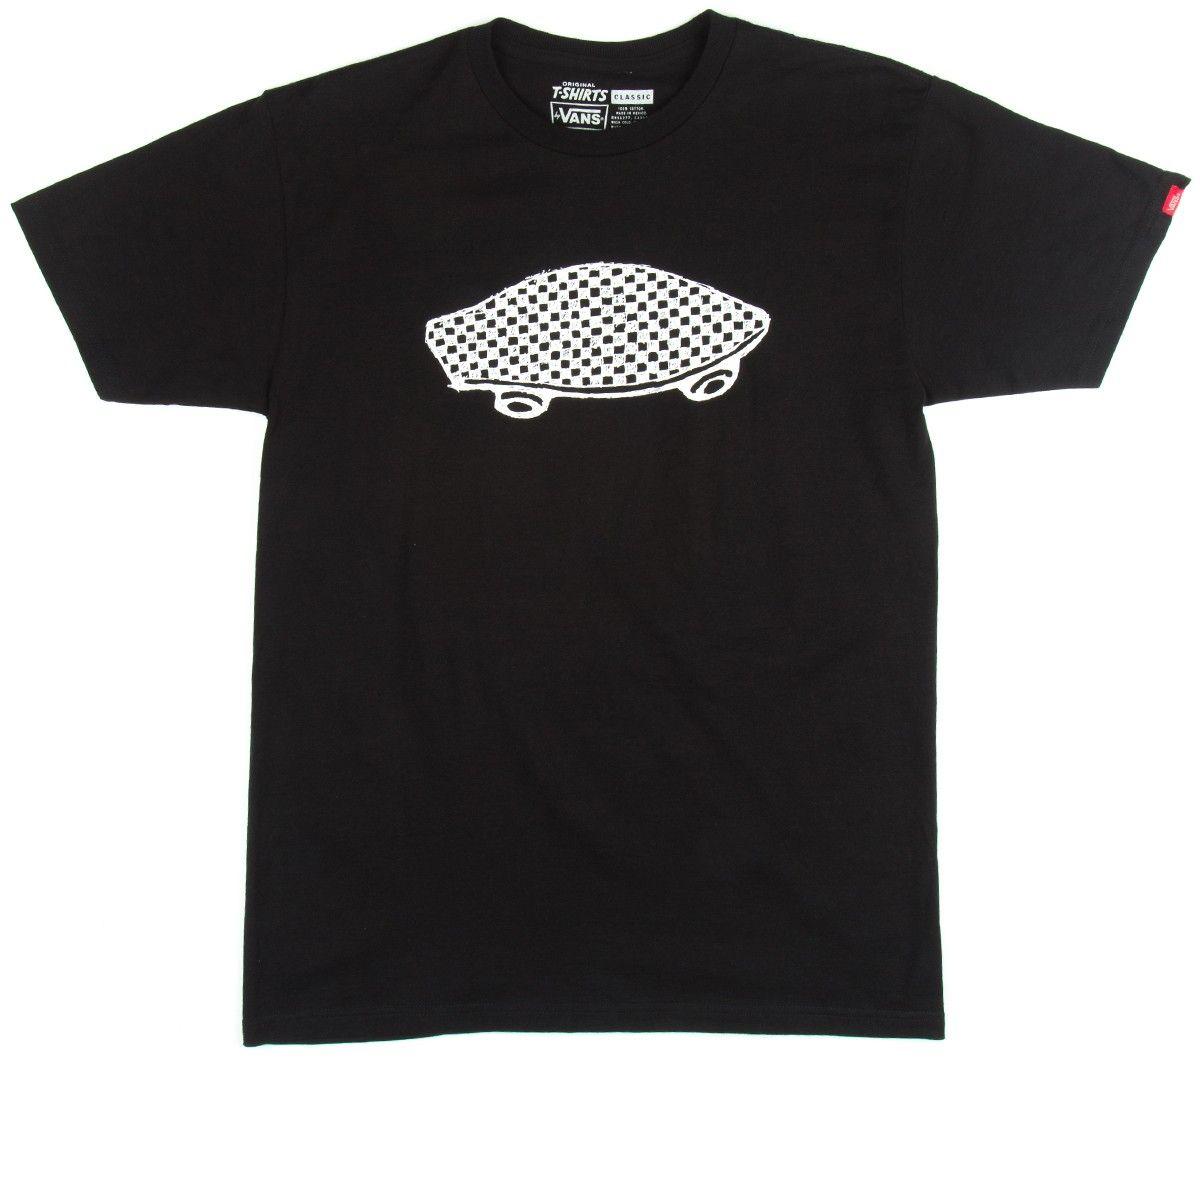 Checkerboard Logo - Vans Checkerboard OTW Logo T-Shirt - Black